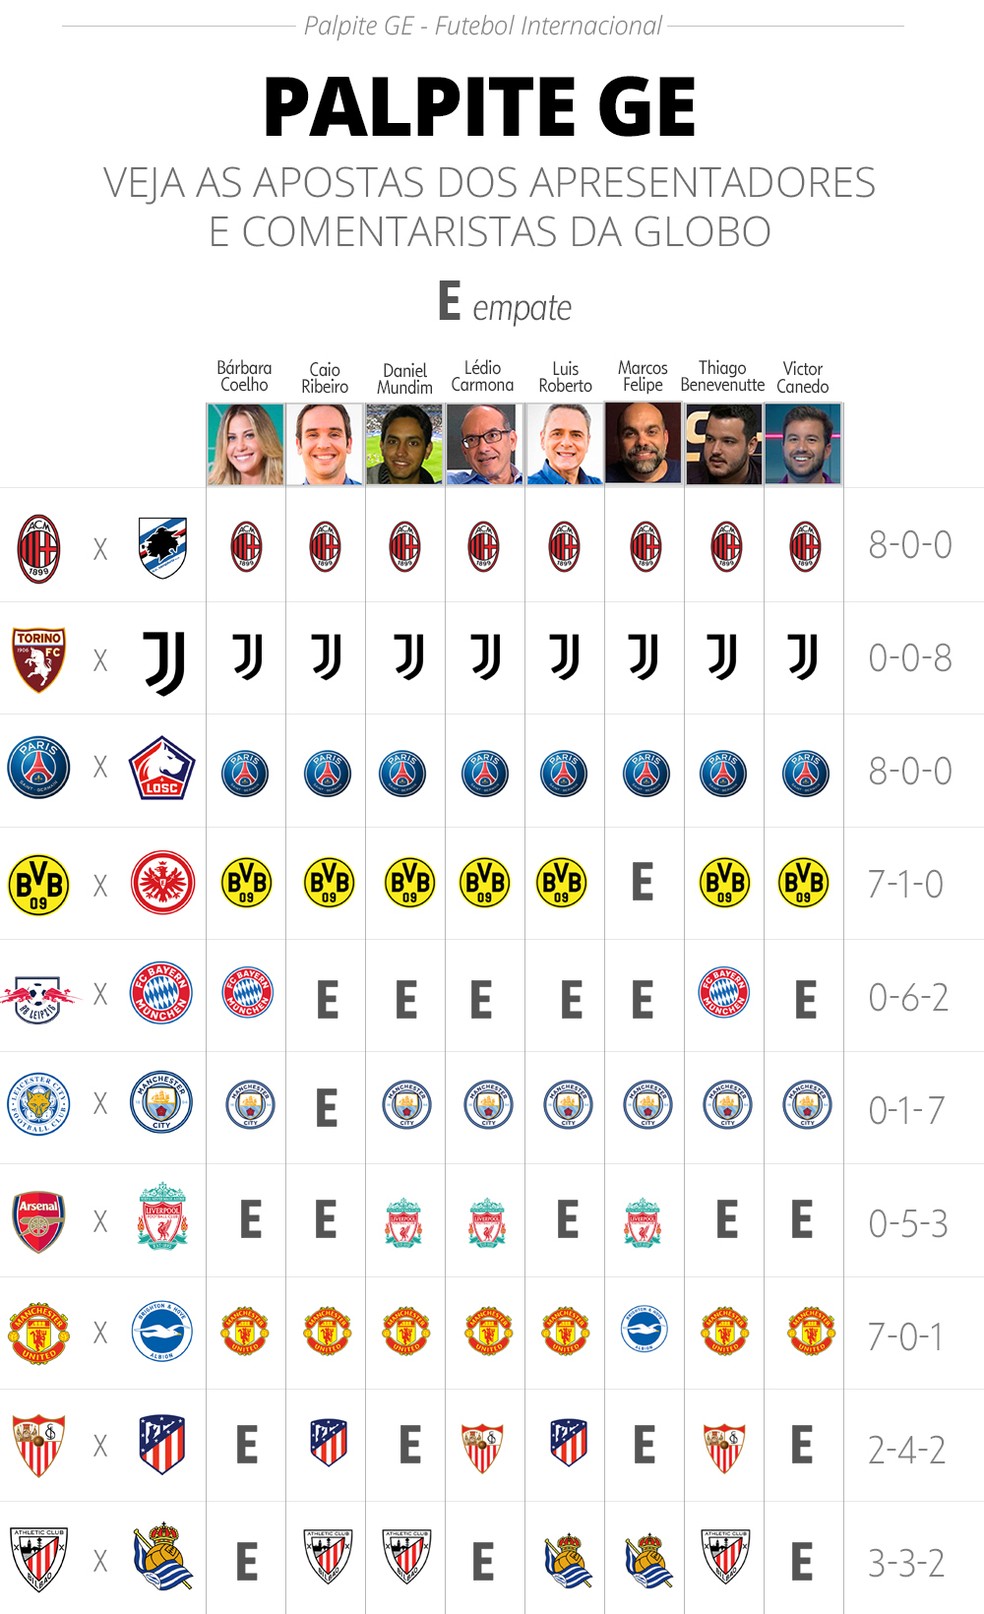 Palpite ge #26: Milan, Juventus e PSG são unânimes, e Liverpool